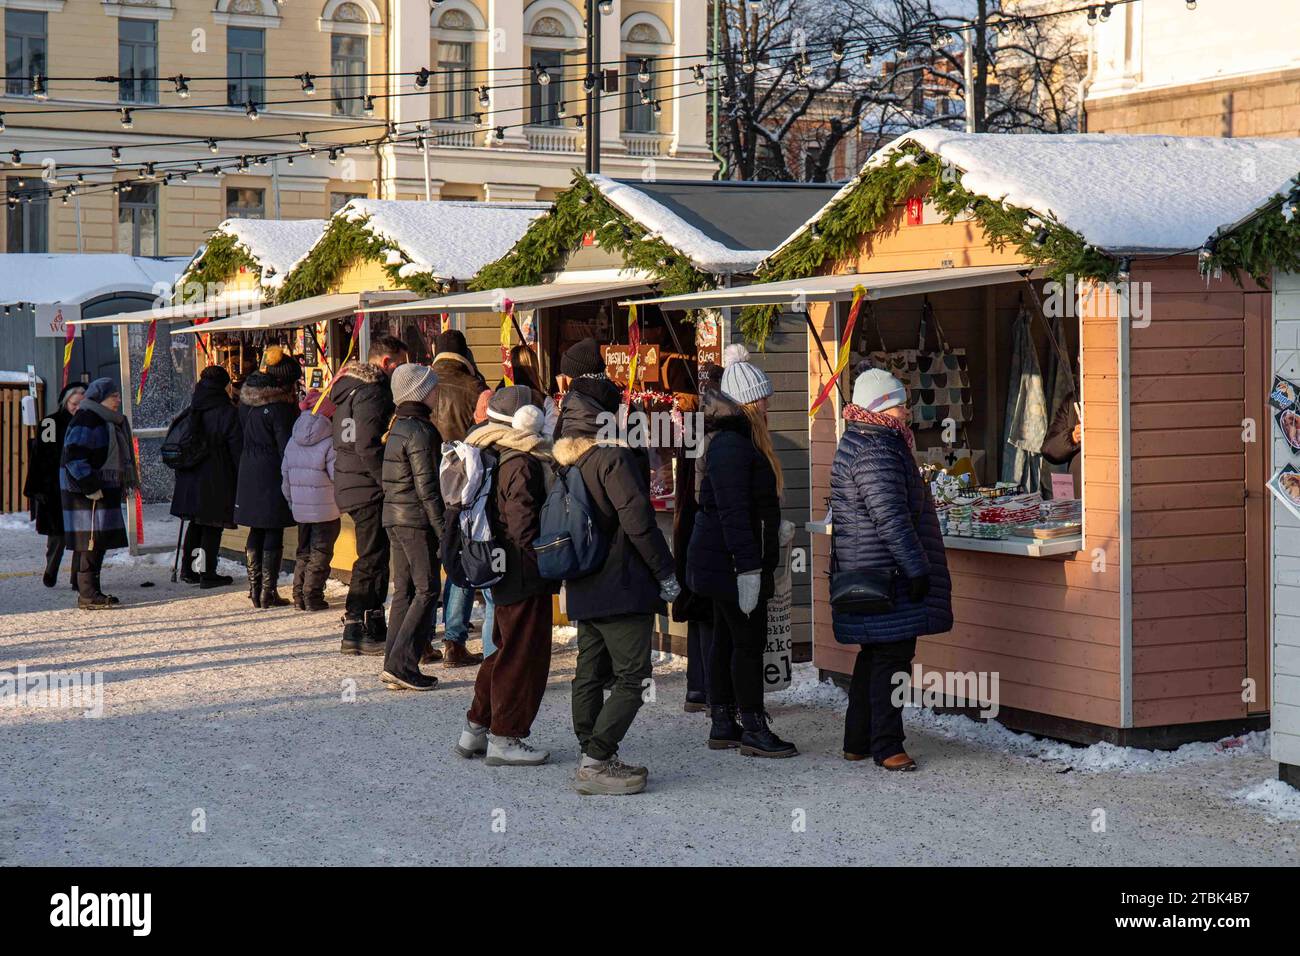 People and market kiosks at Tuomaan markkinat or Helsinki Christmas Market on Senate Square in Helsinki, Finland Stock Photo